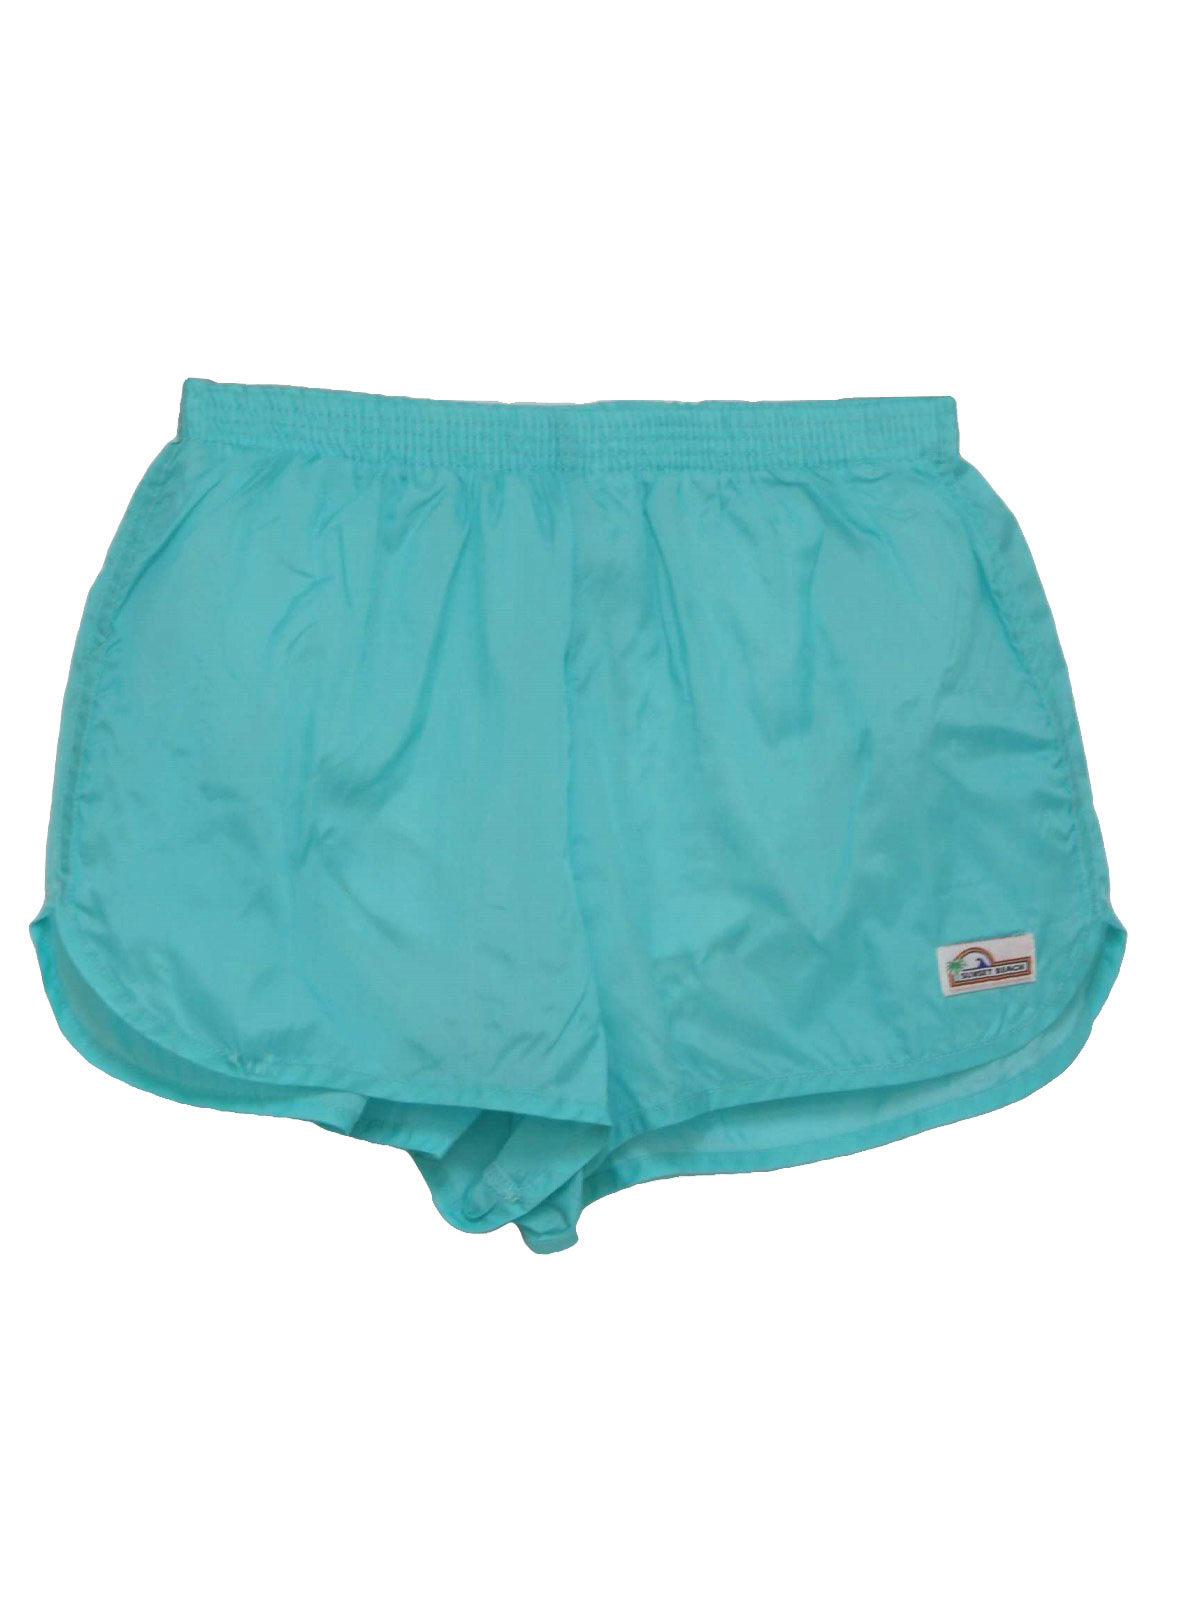 Vintage 1980's Shorts: 80s -Sunset beach- Mens light teal blue nylon ...